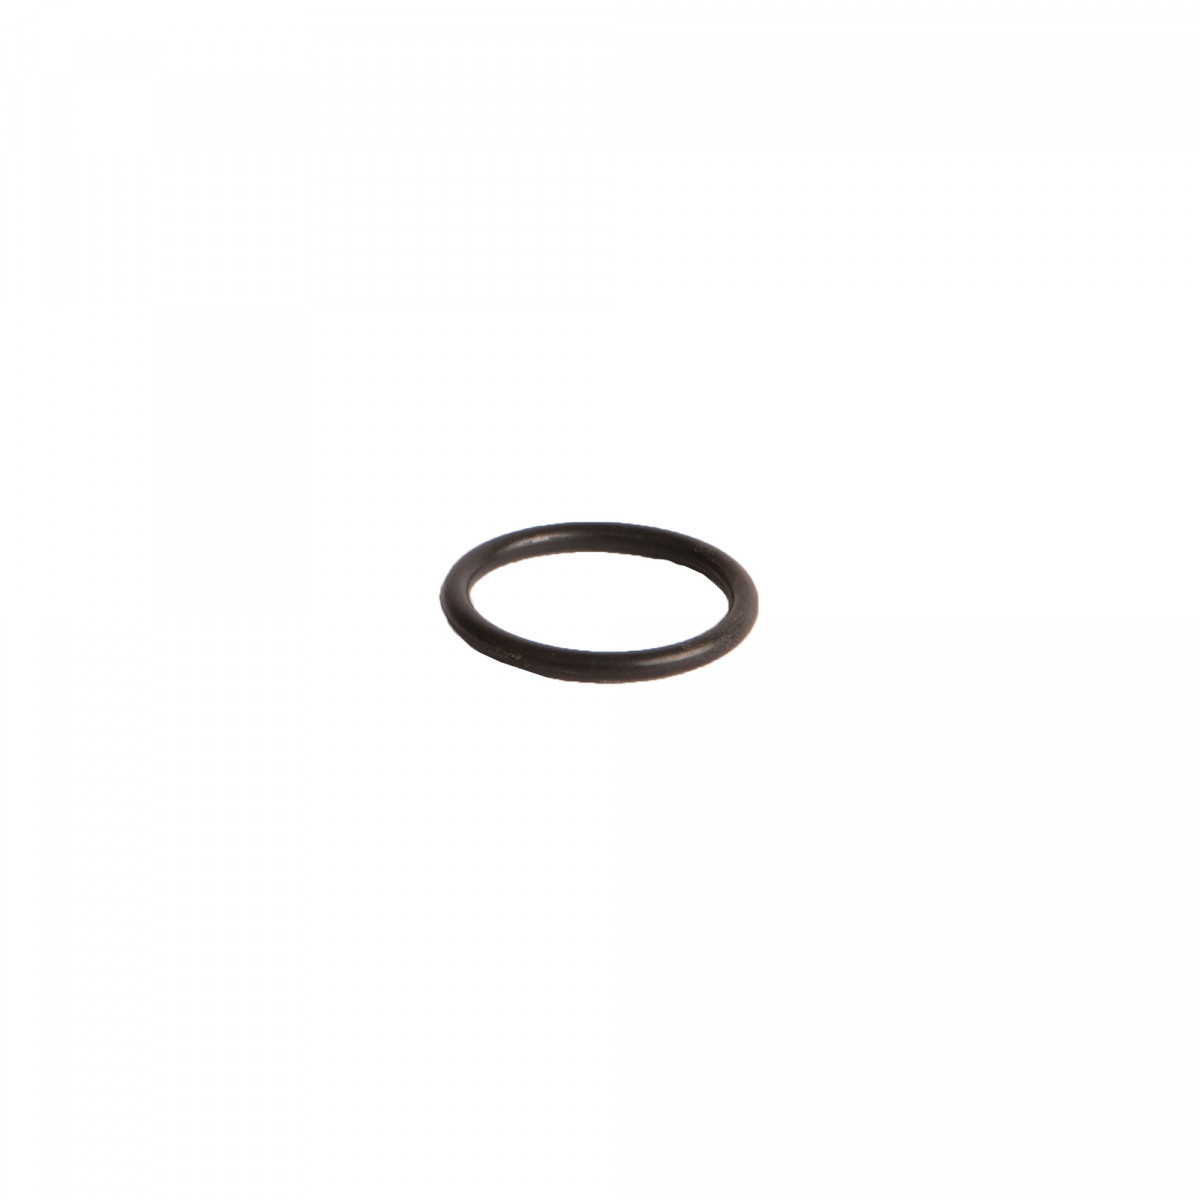 O-ring 2,6 x 21 mm for filling head SST